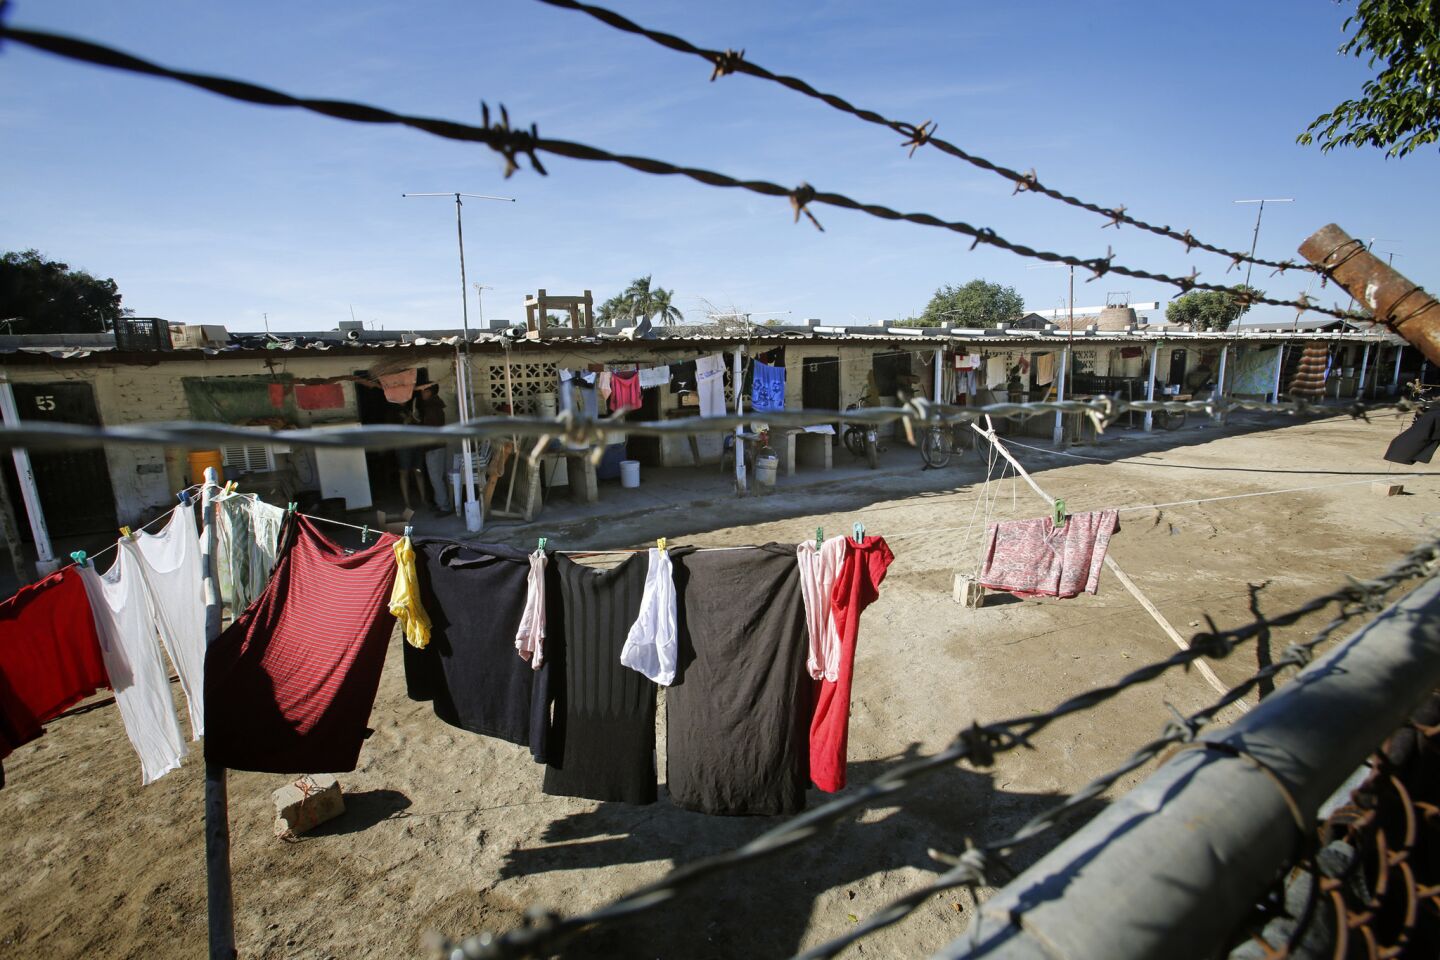 Mexico farm labor camps inline barbed wire